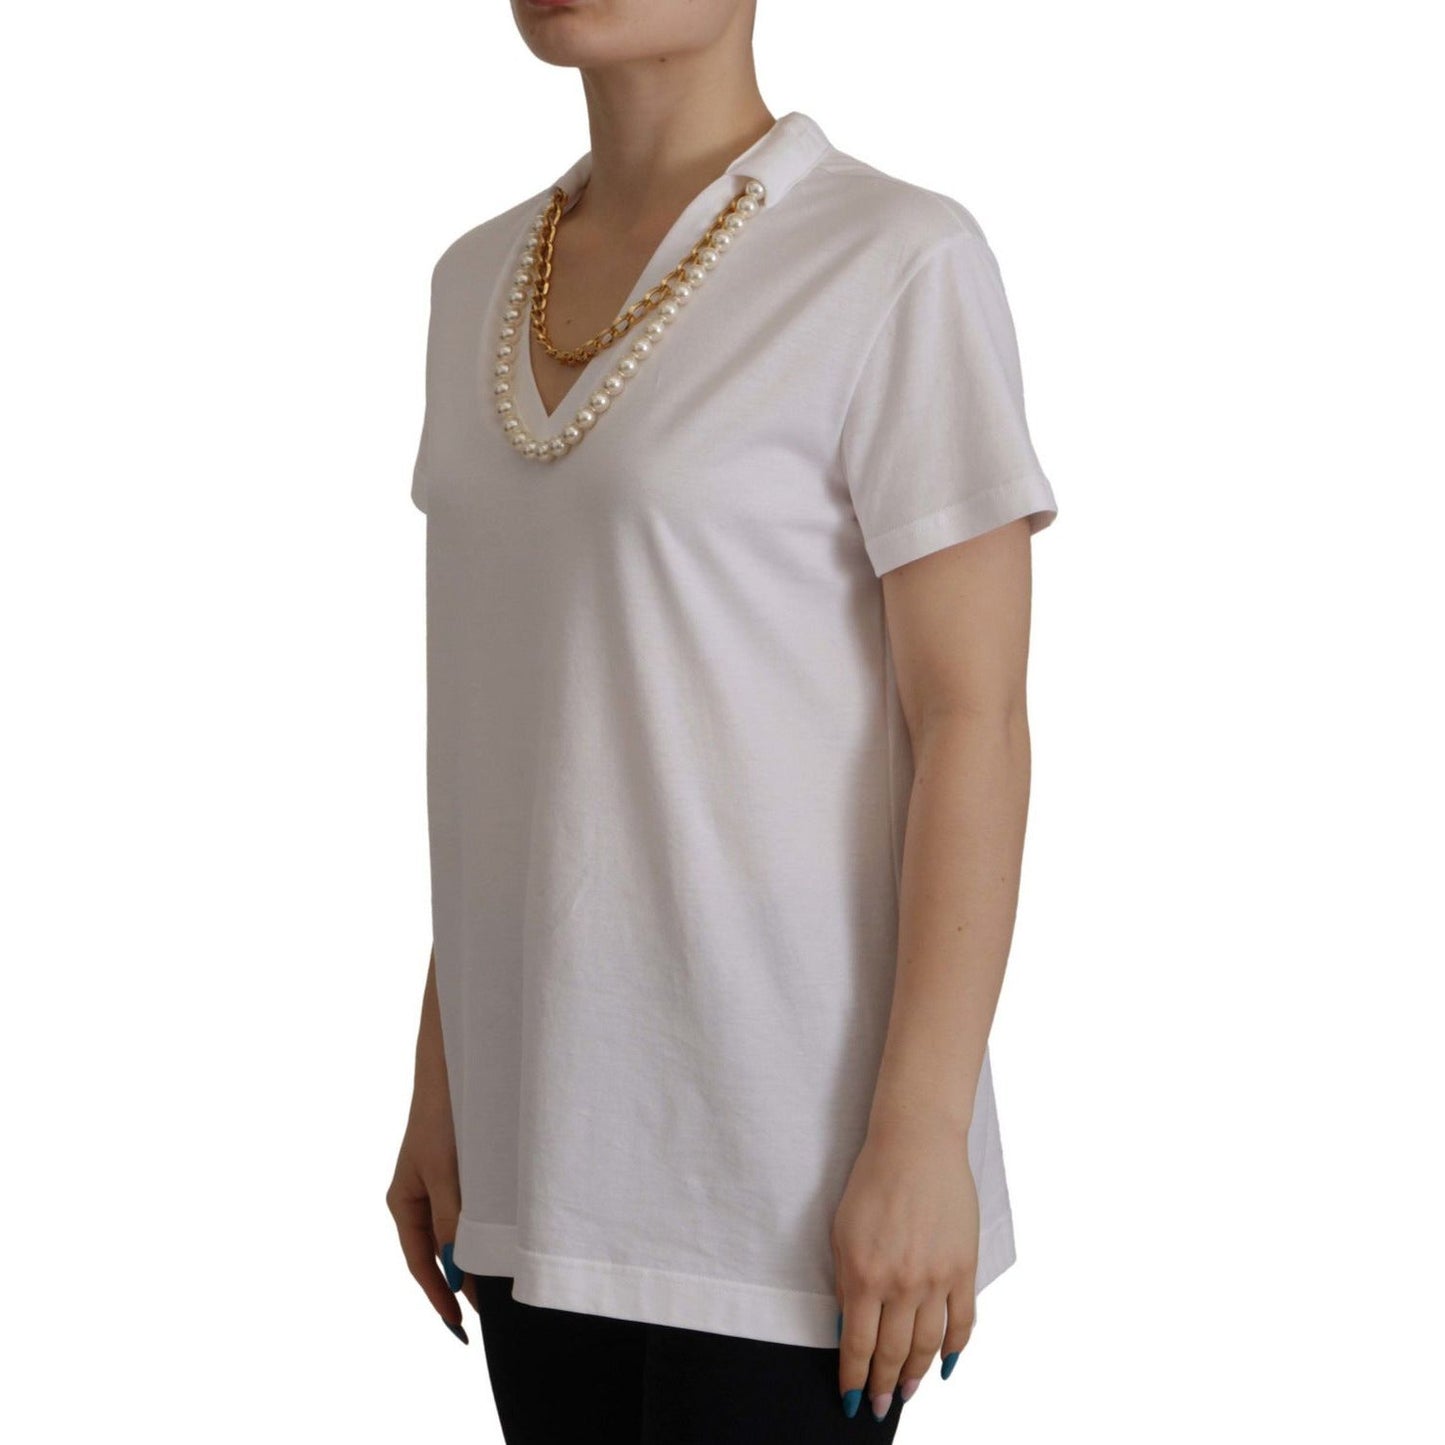 Dolce & Gabbana Stunning V-Neckline Logo Embellished Tee white-necklace-embellished-neckline-t-shirt-top